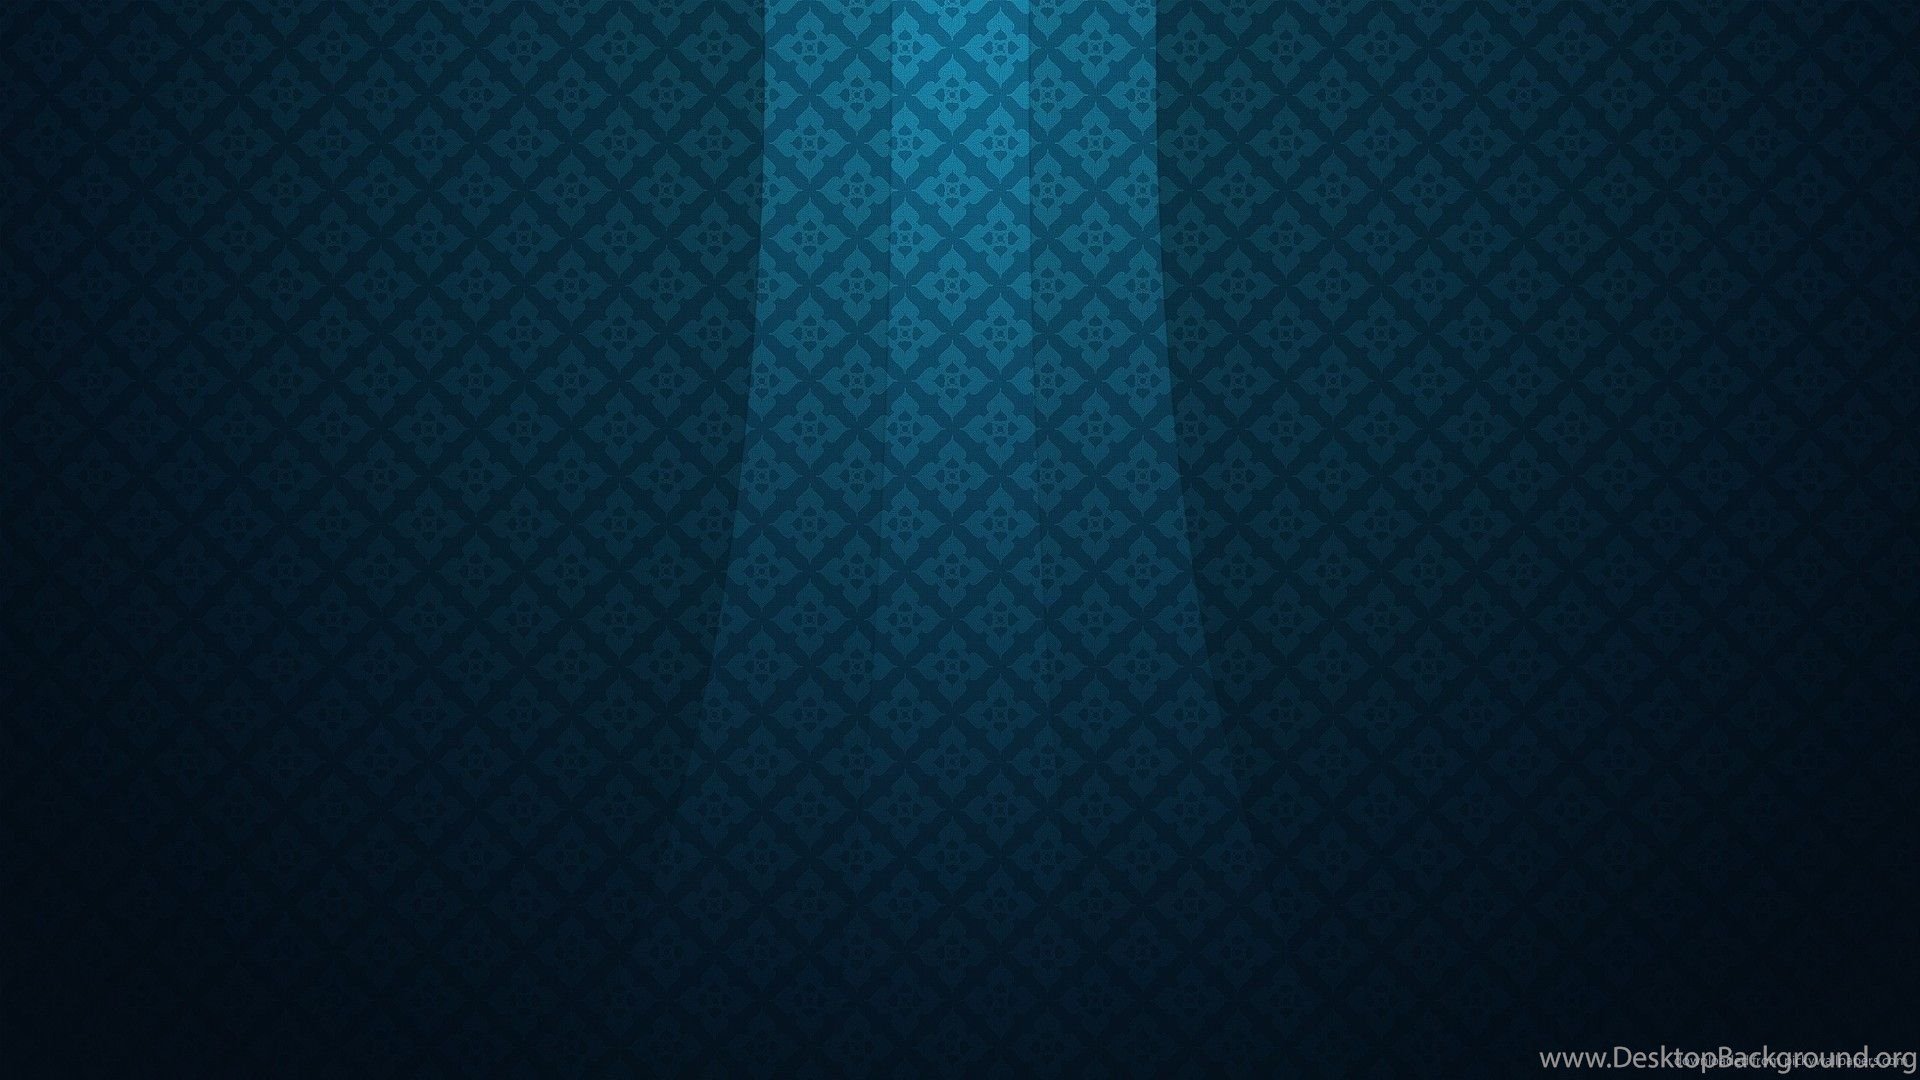 Download 1920x1080 Minimalistic Dark Blue Pattern Wallpaper Desktop Background